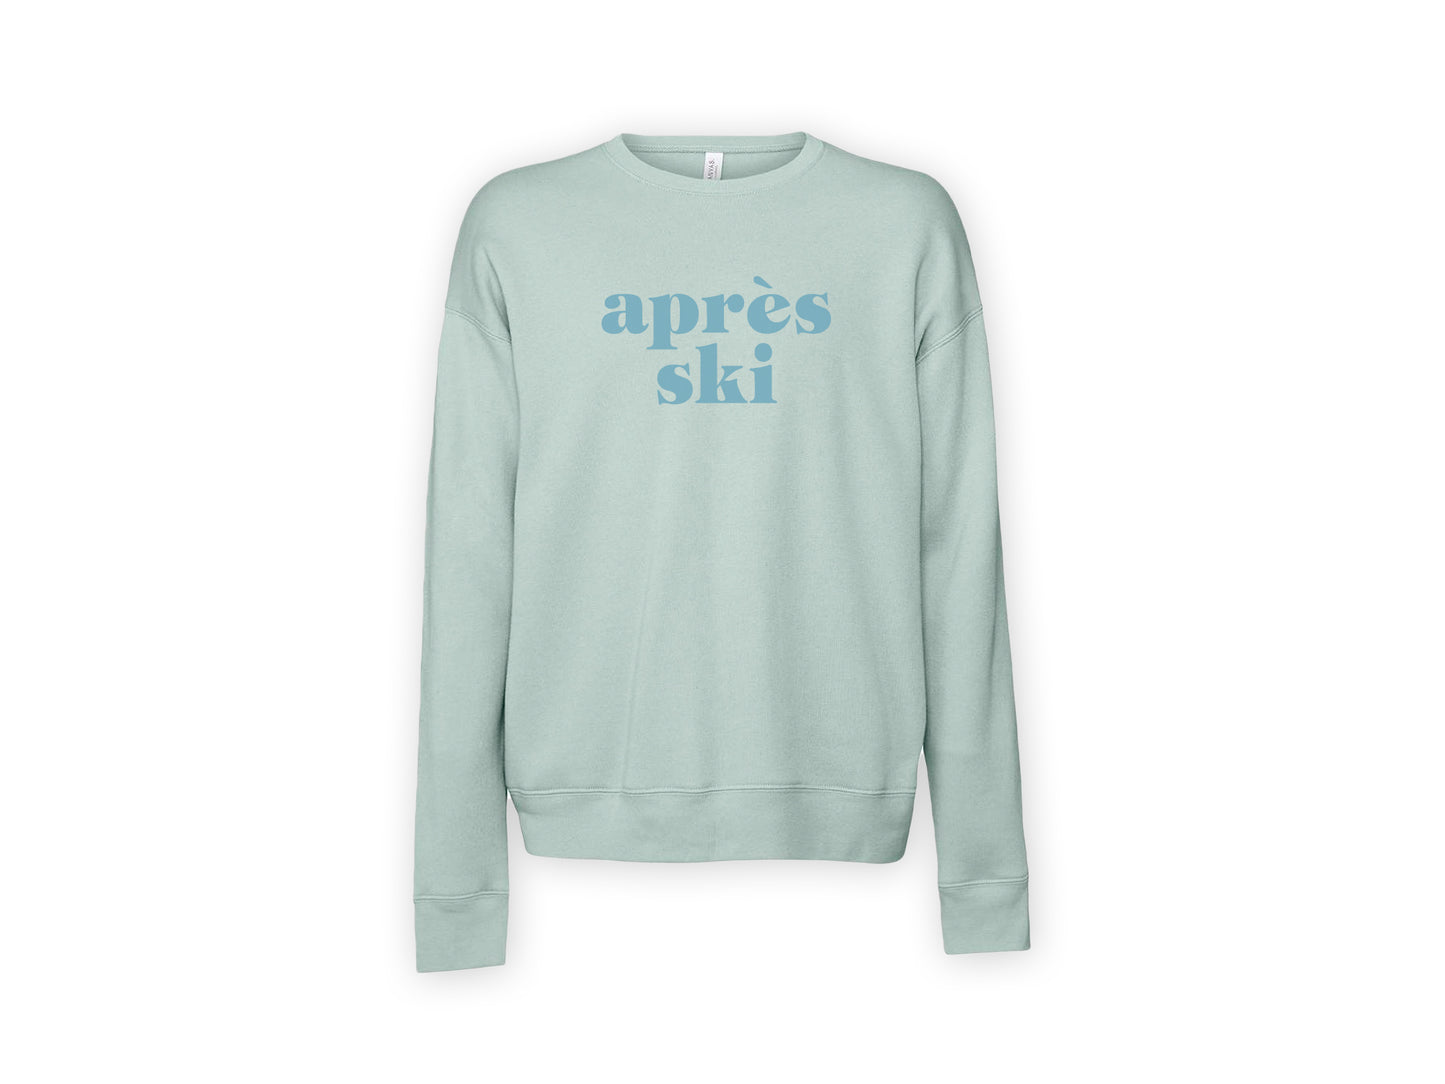 Bella Canvas 3945 Heather Dusty Blue Soft Crewneck Sweatshirt Vintage Apres Ski Shirt